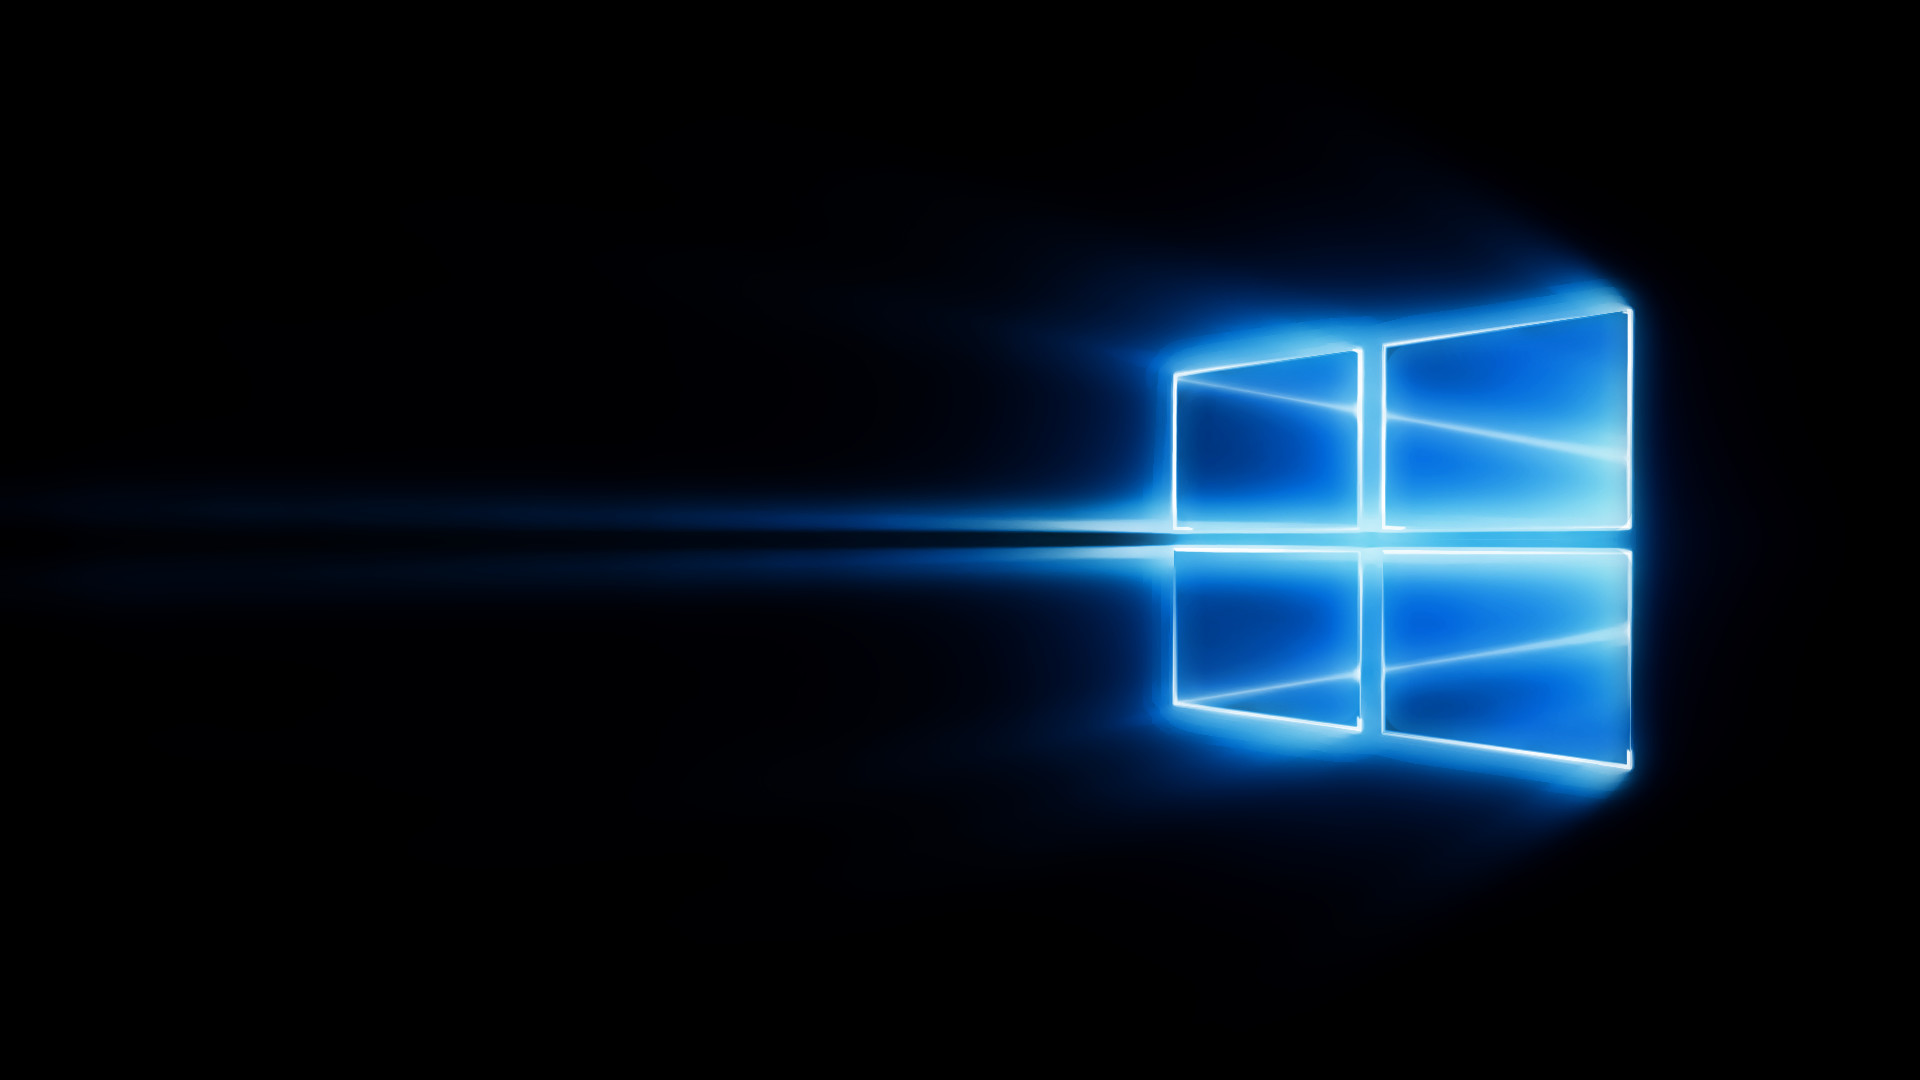 Windows Logo HD Wallpaper Image